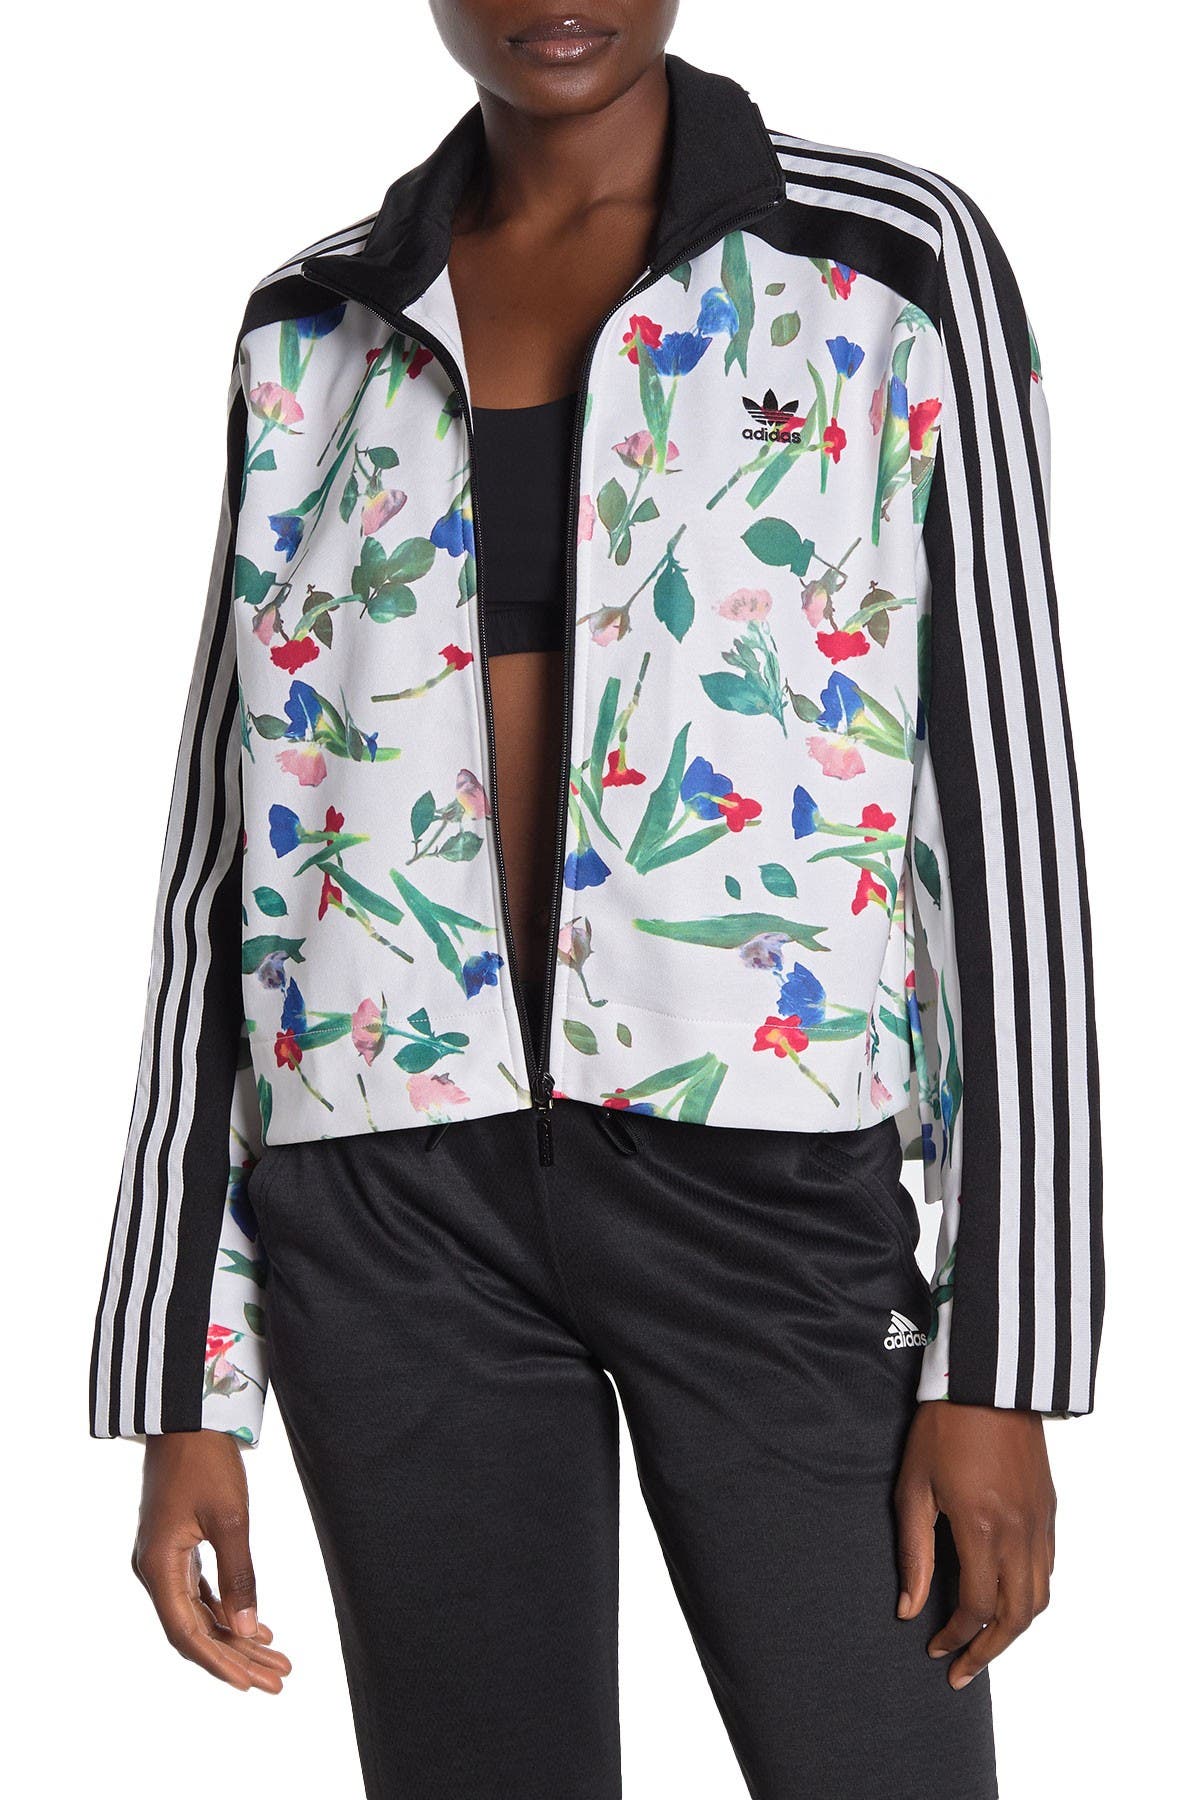 adidas flower jacket womens